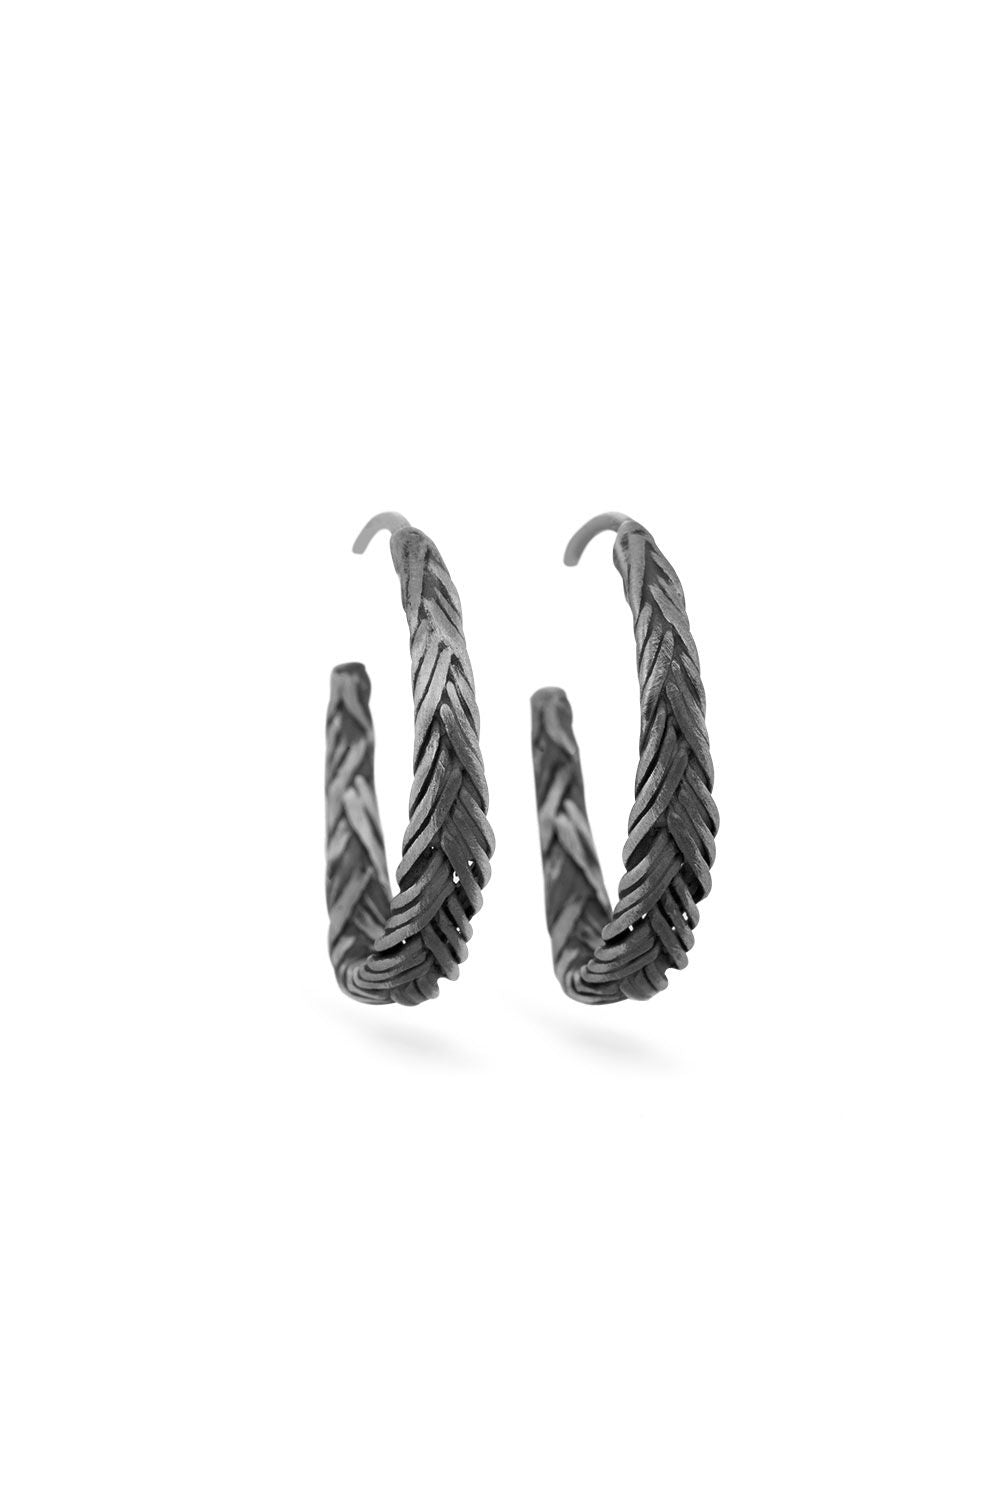 Braid Earrings - Silver hoops small